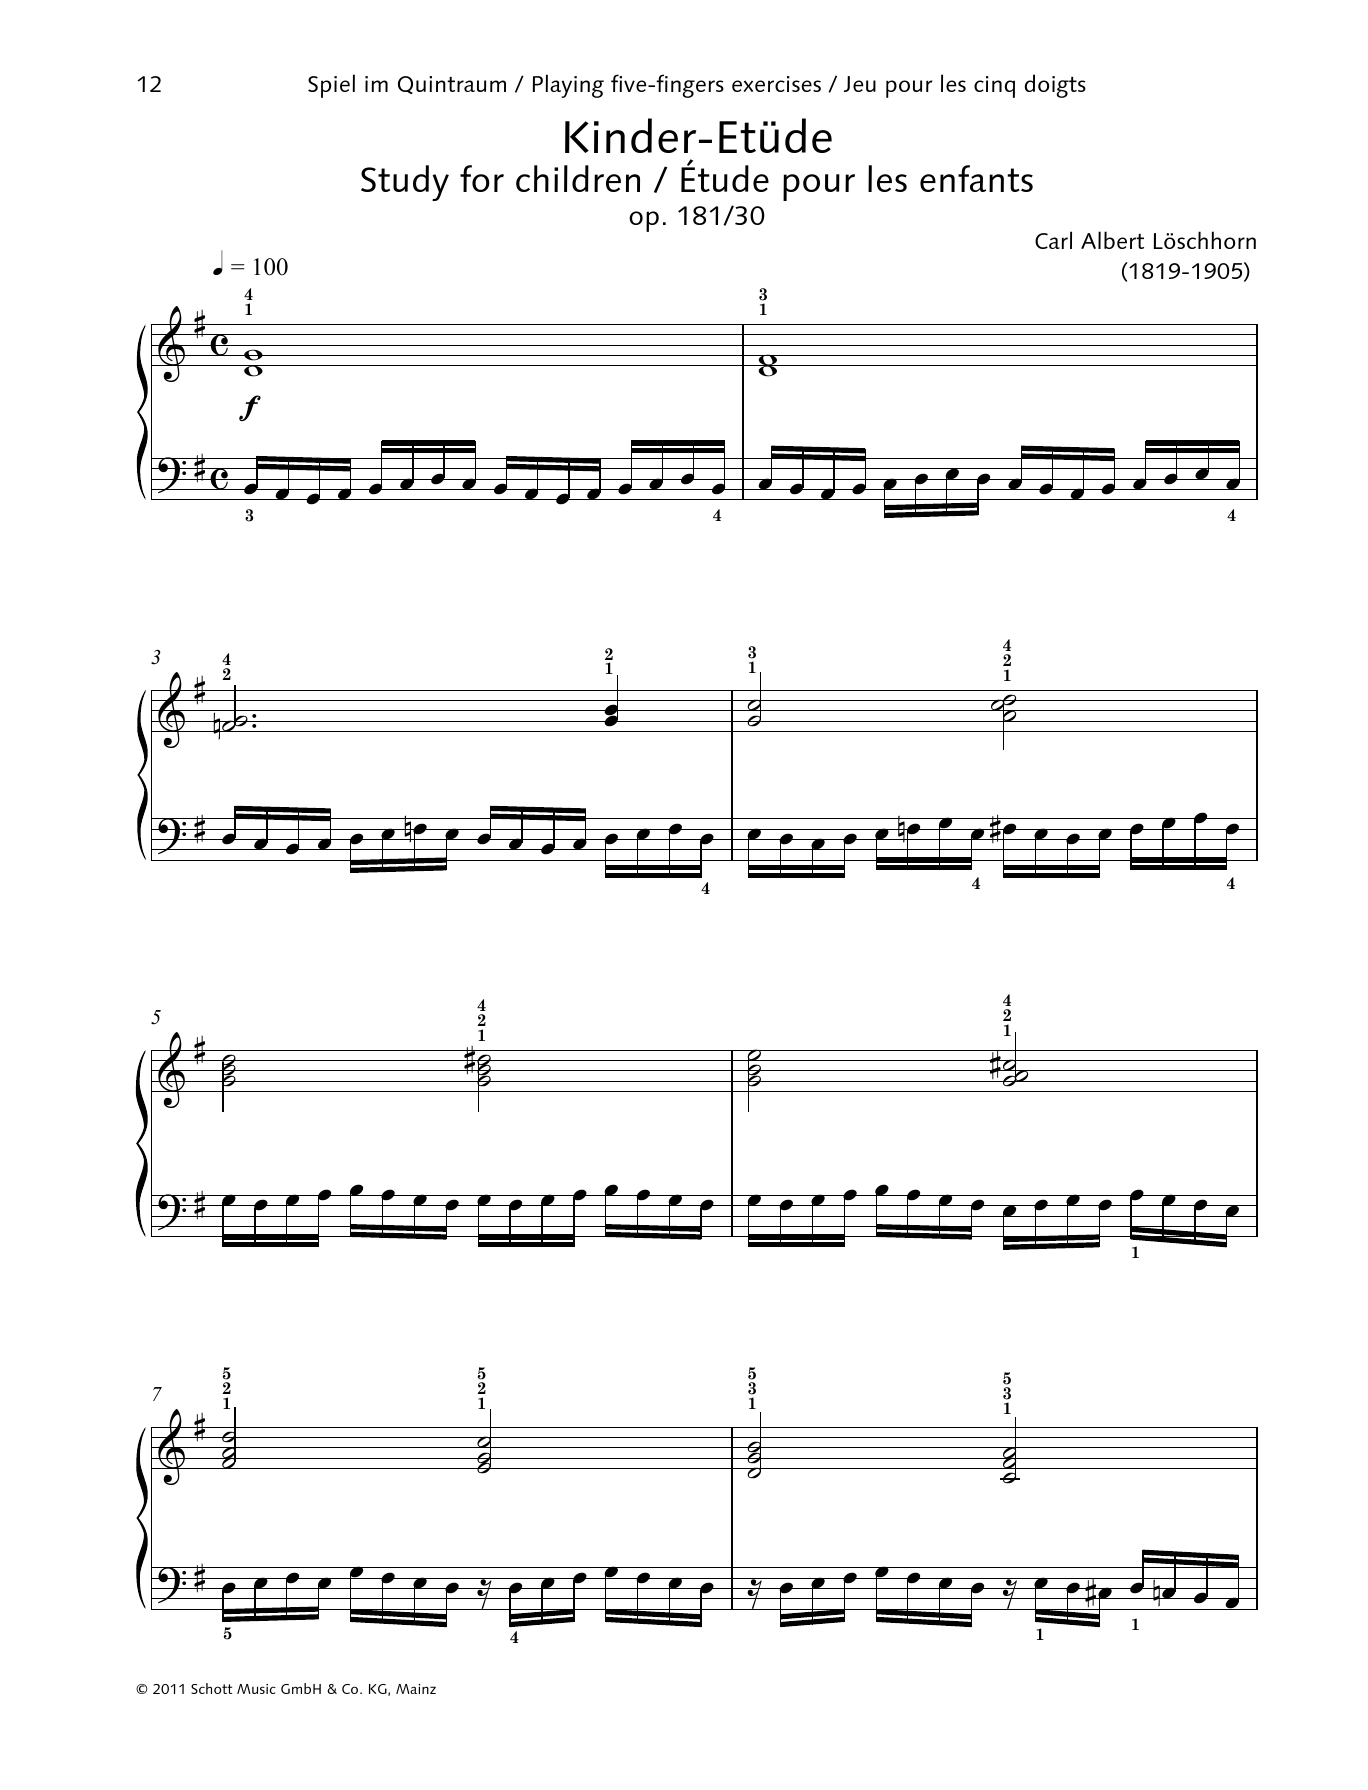 Download Carl Albert Loschhorn Study for children Sheet Music